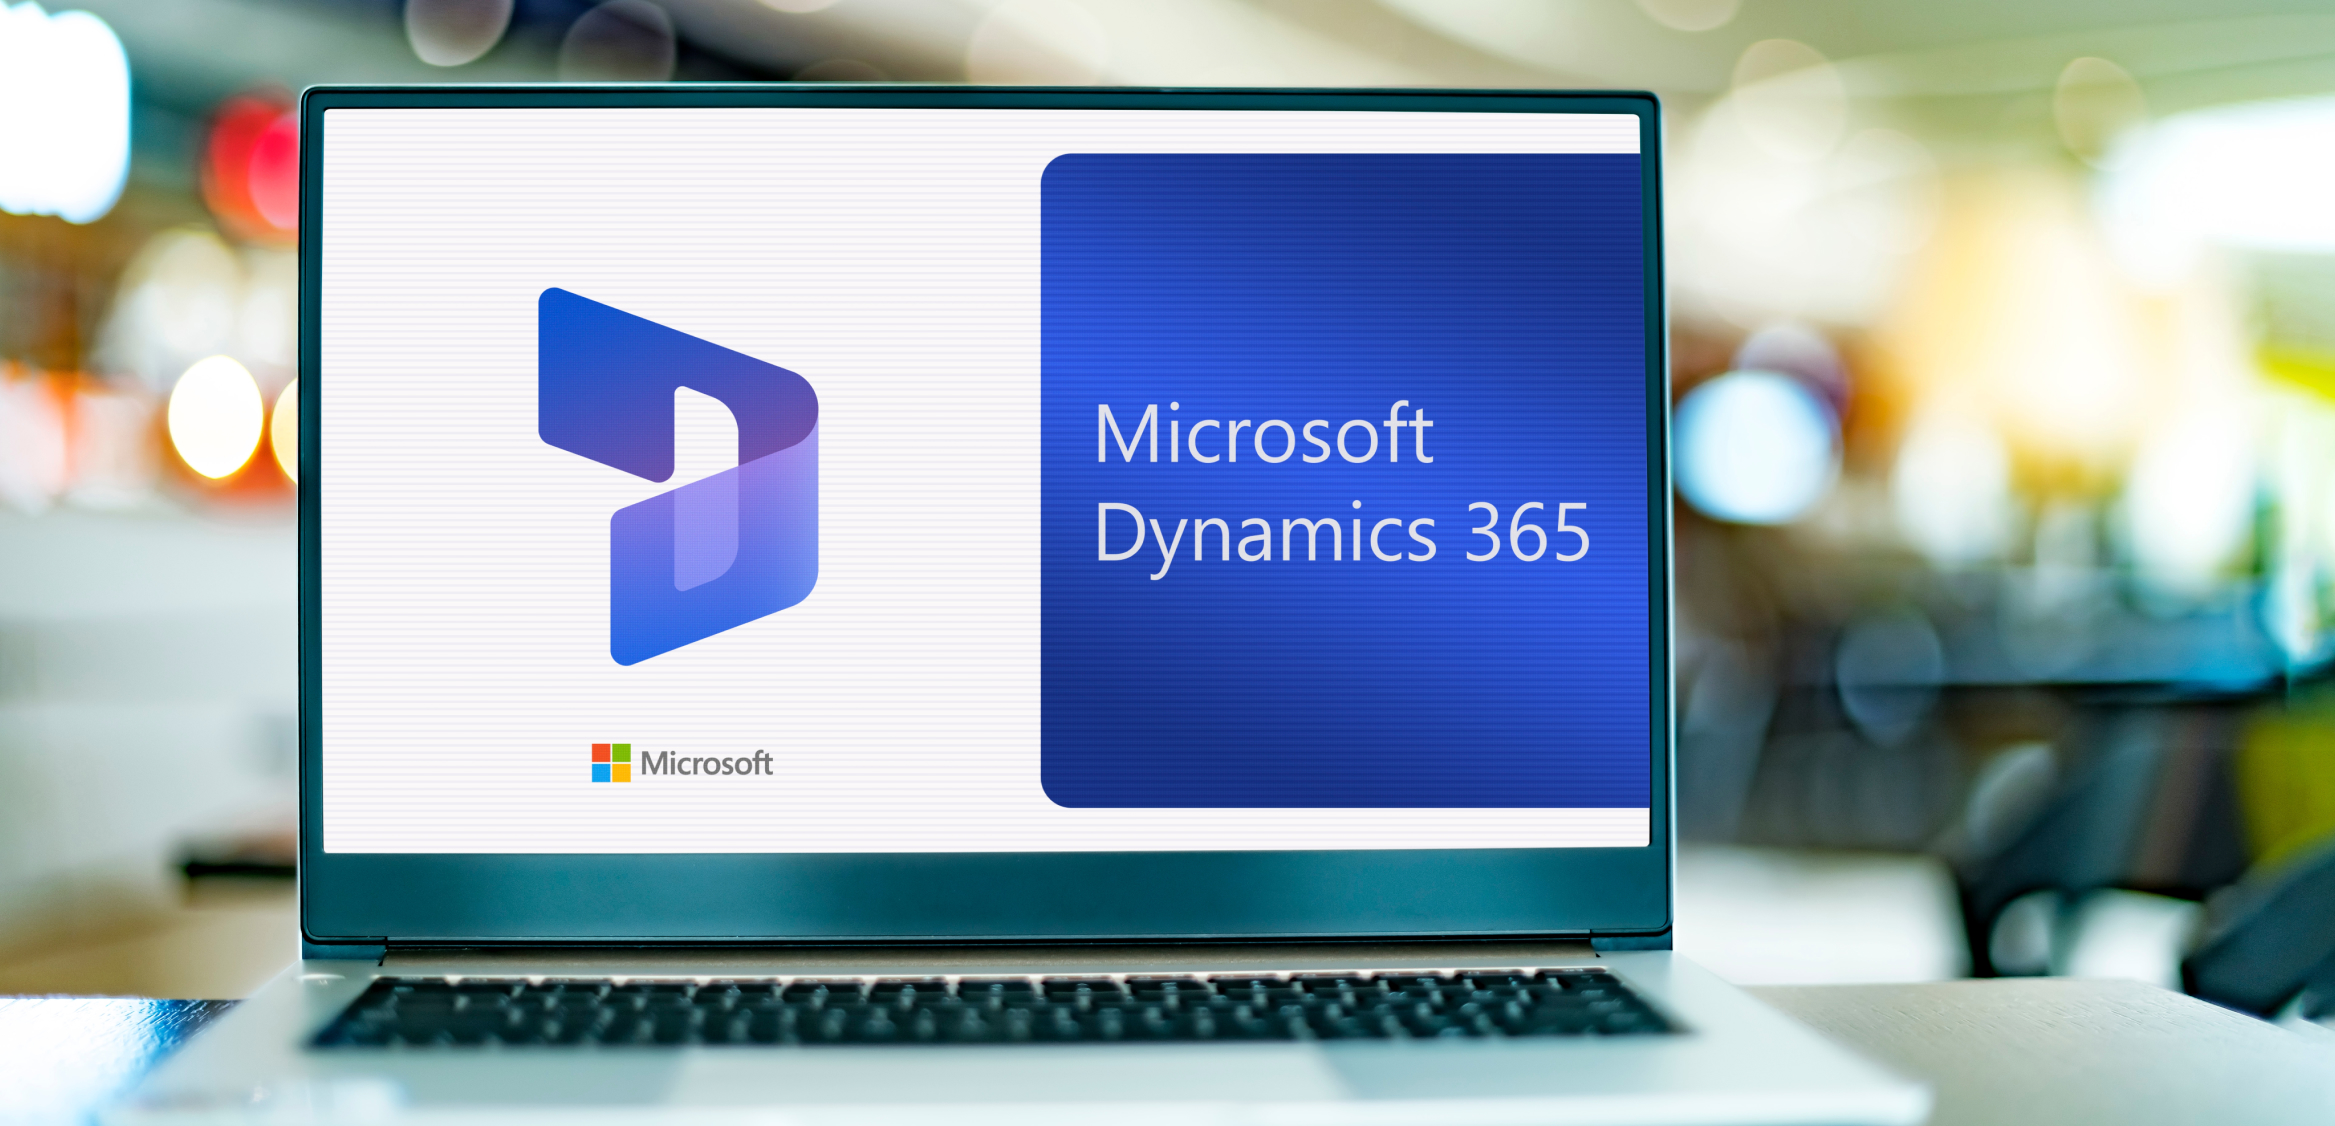 Microsoft Dynamics 365 asset management